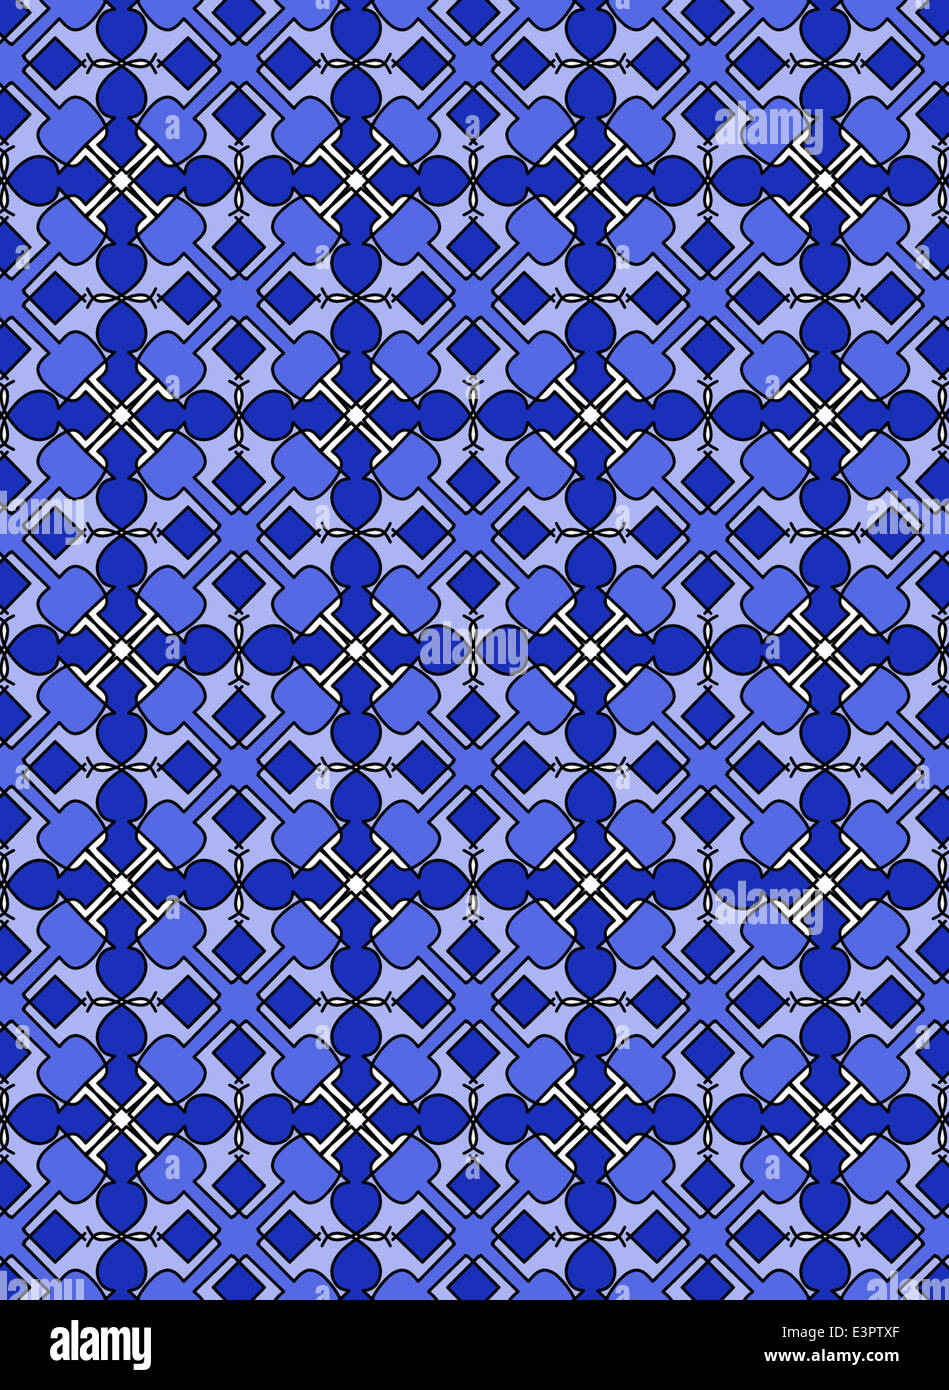 Illustration of symmetrical patterned wallpaper Stock Photo